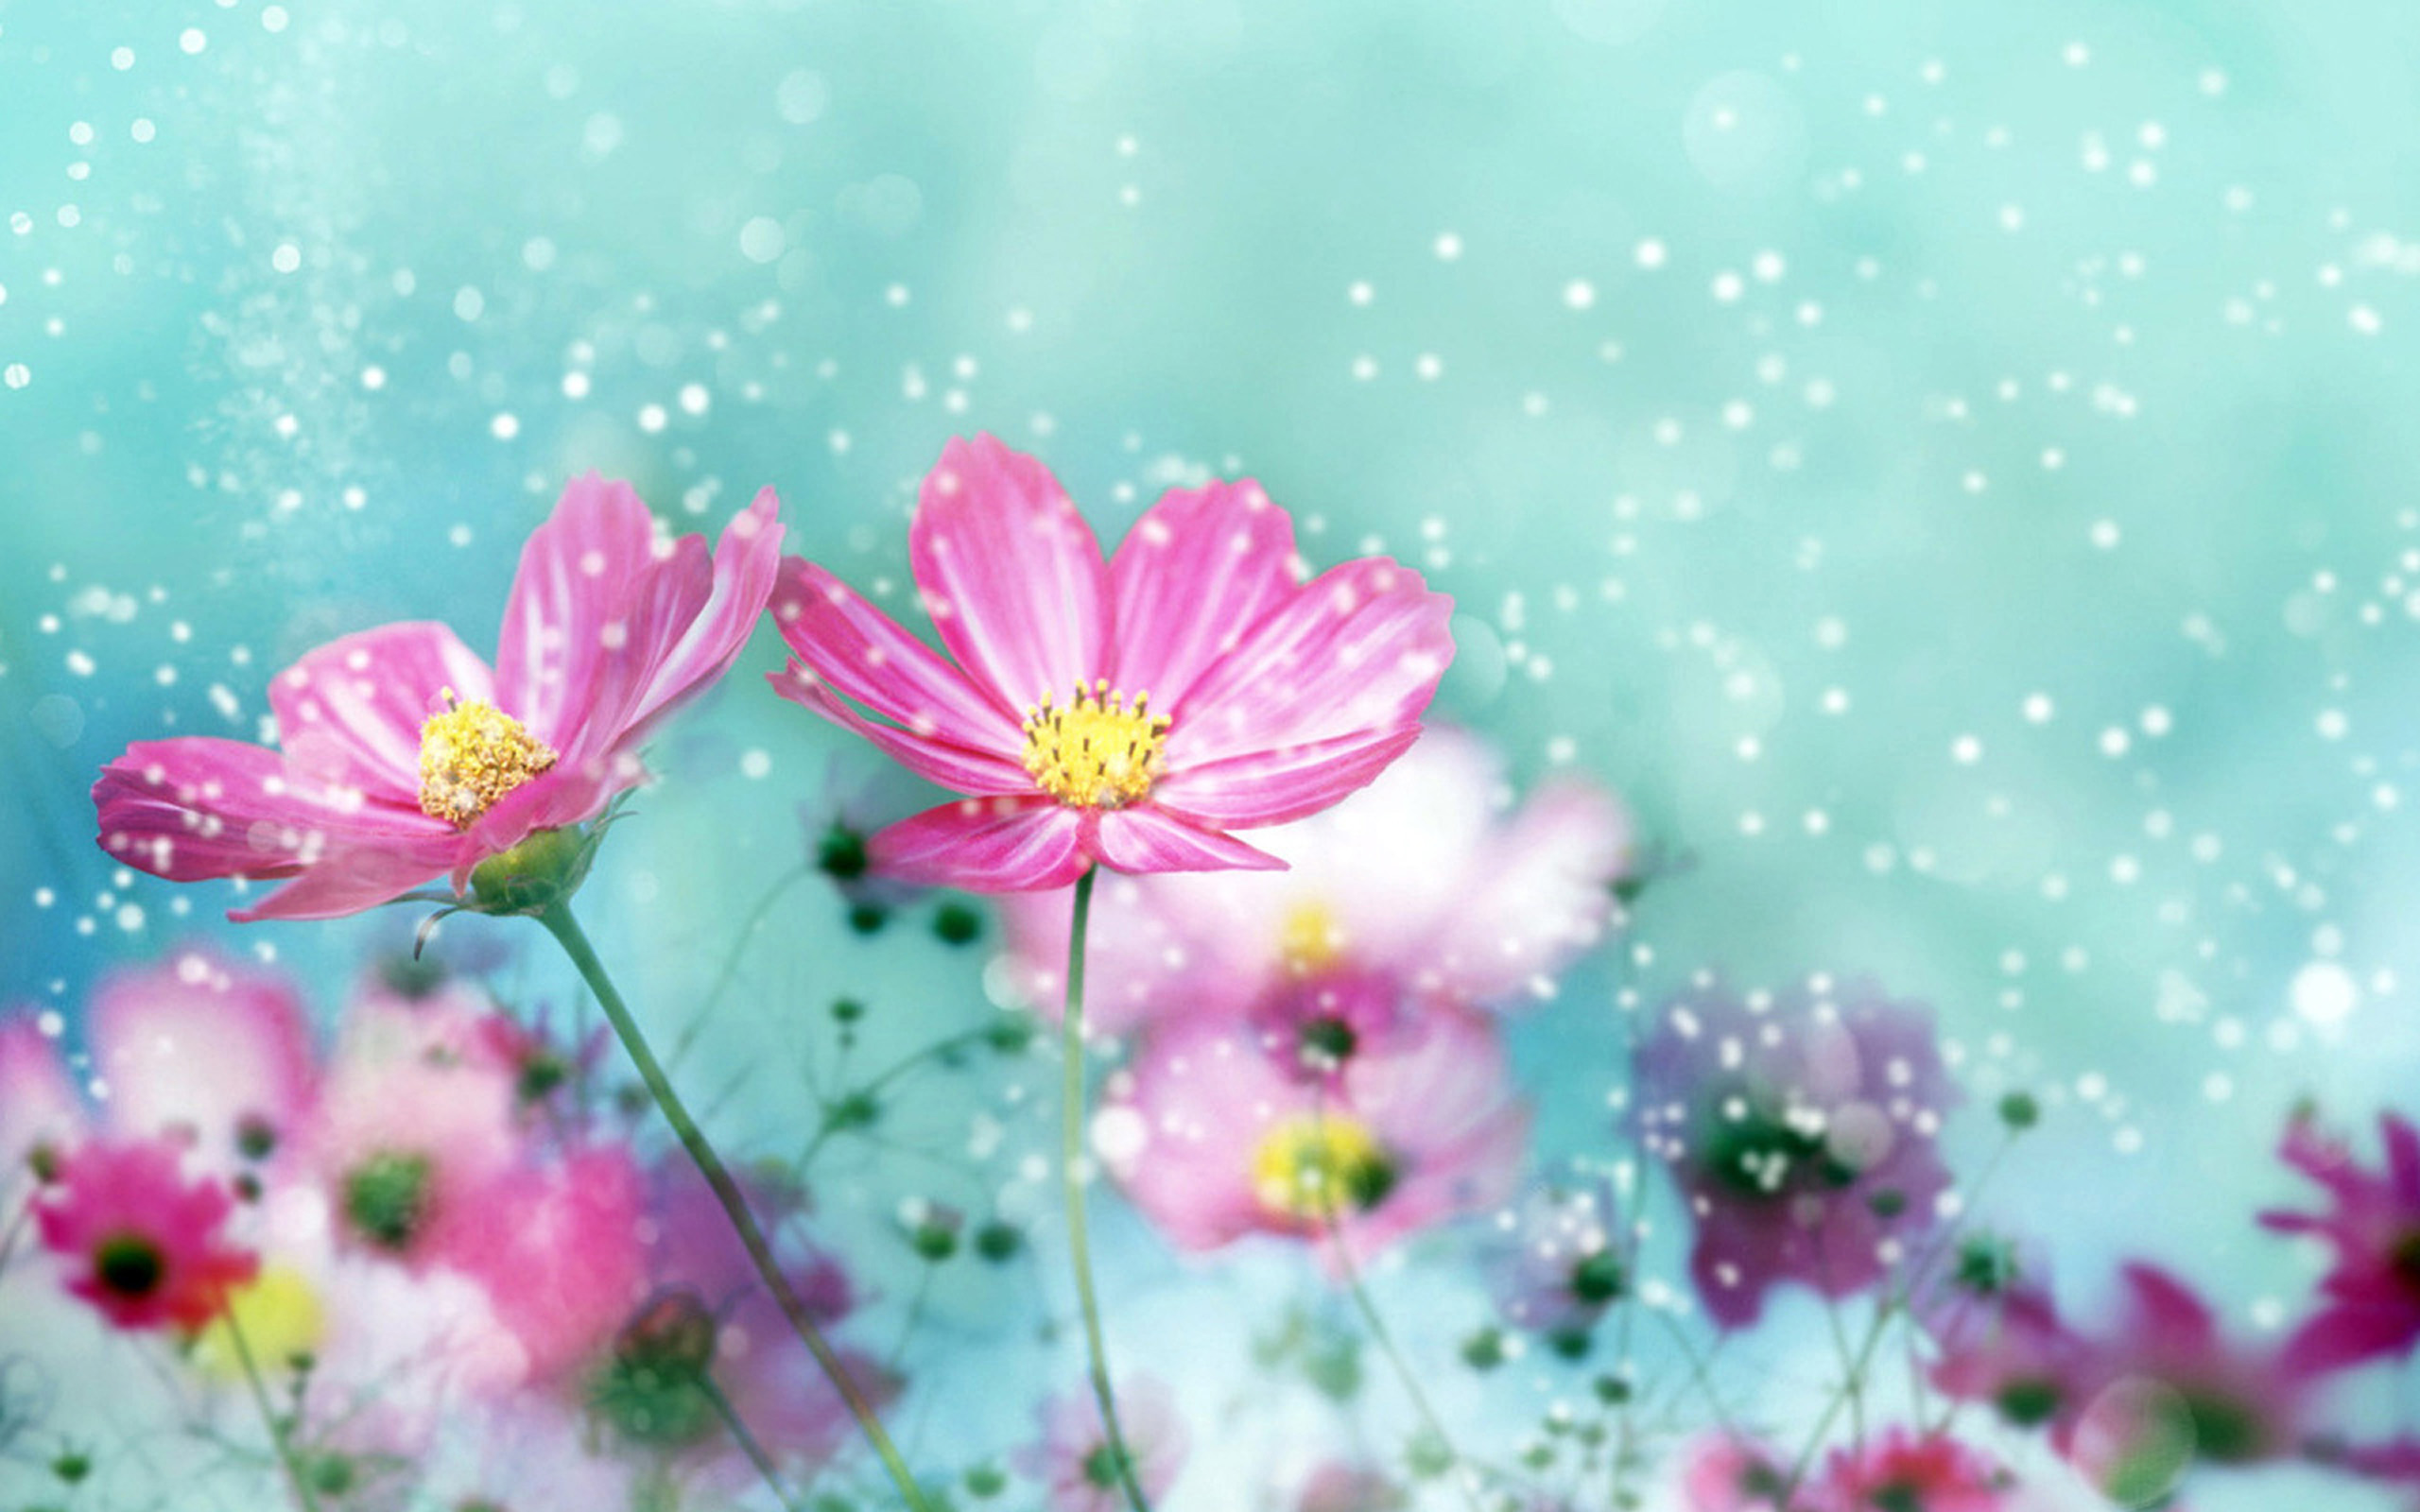 Beautiful Flower Wallpaper For Desktop To Make Your